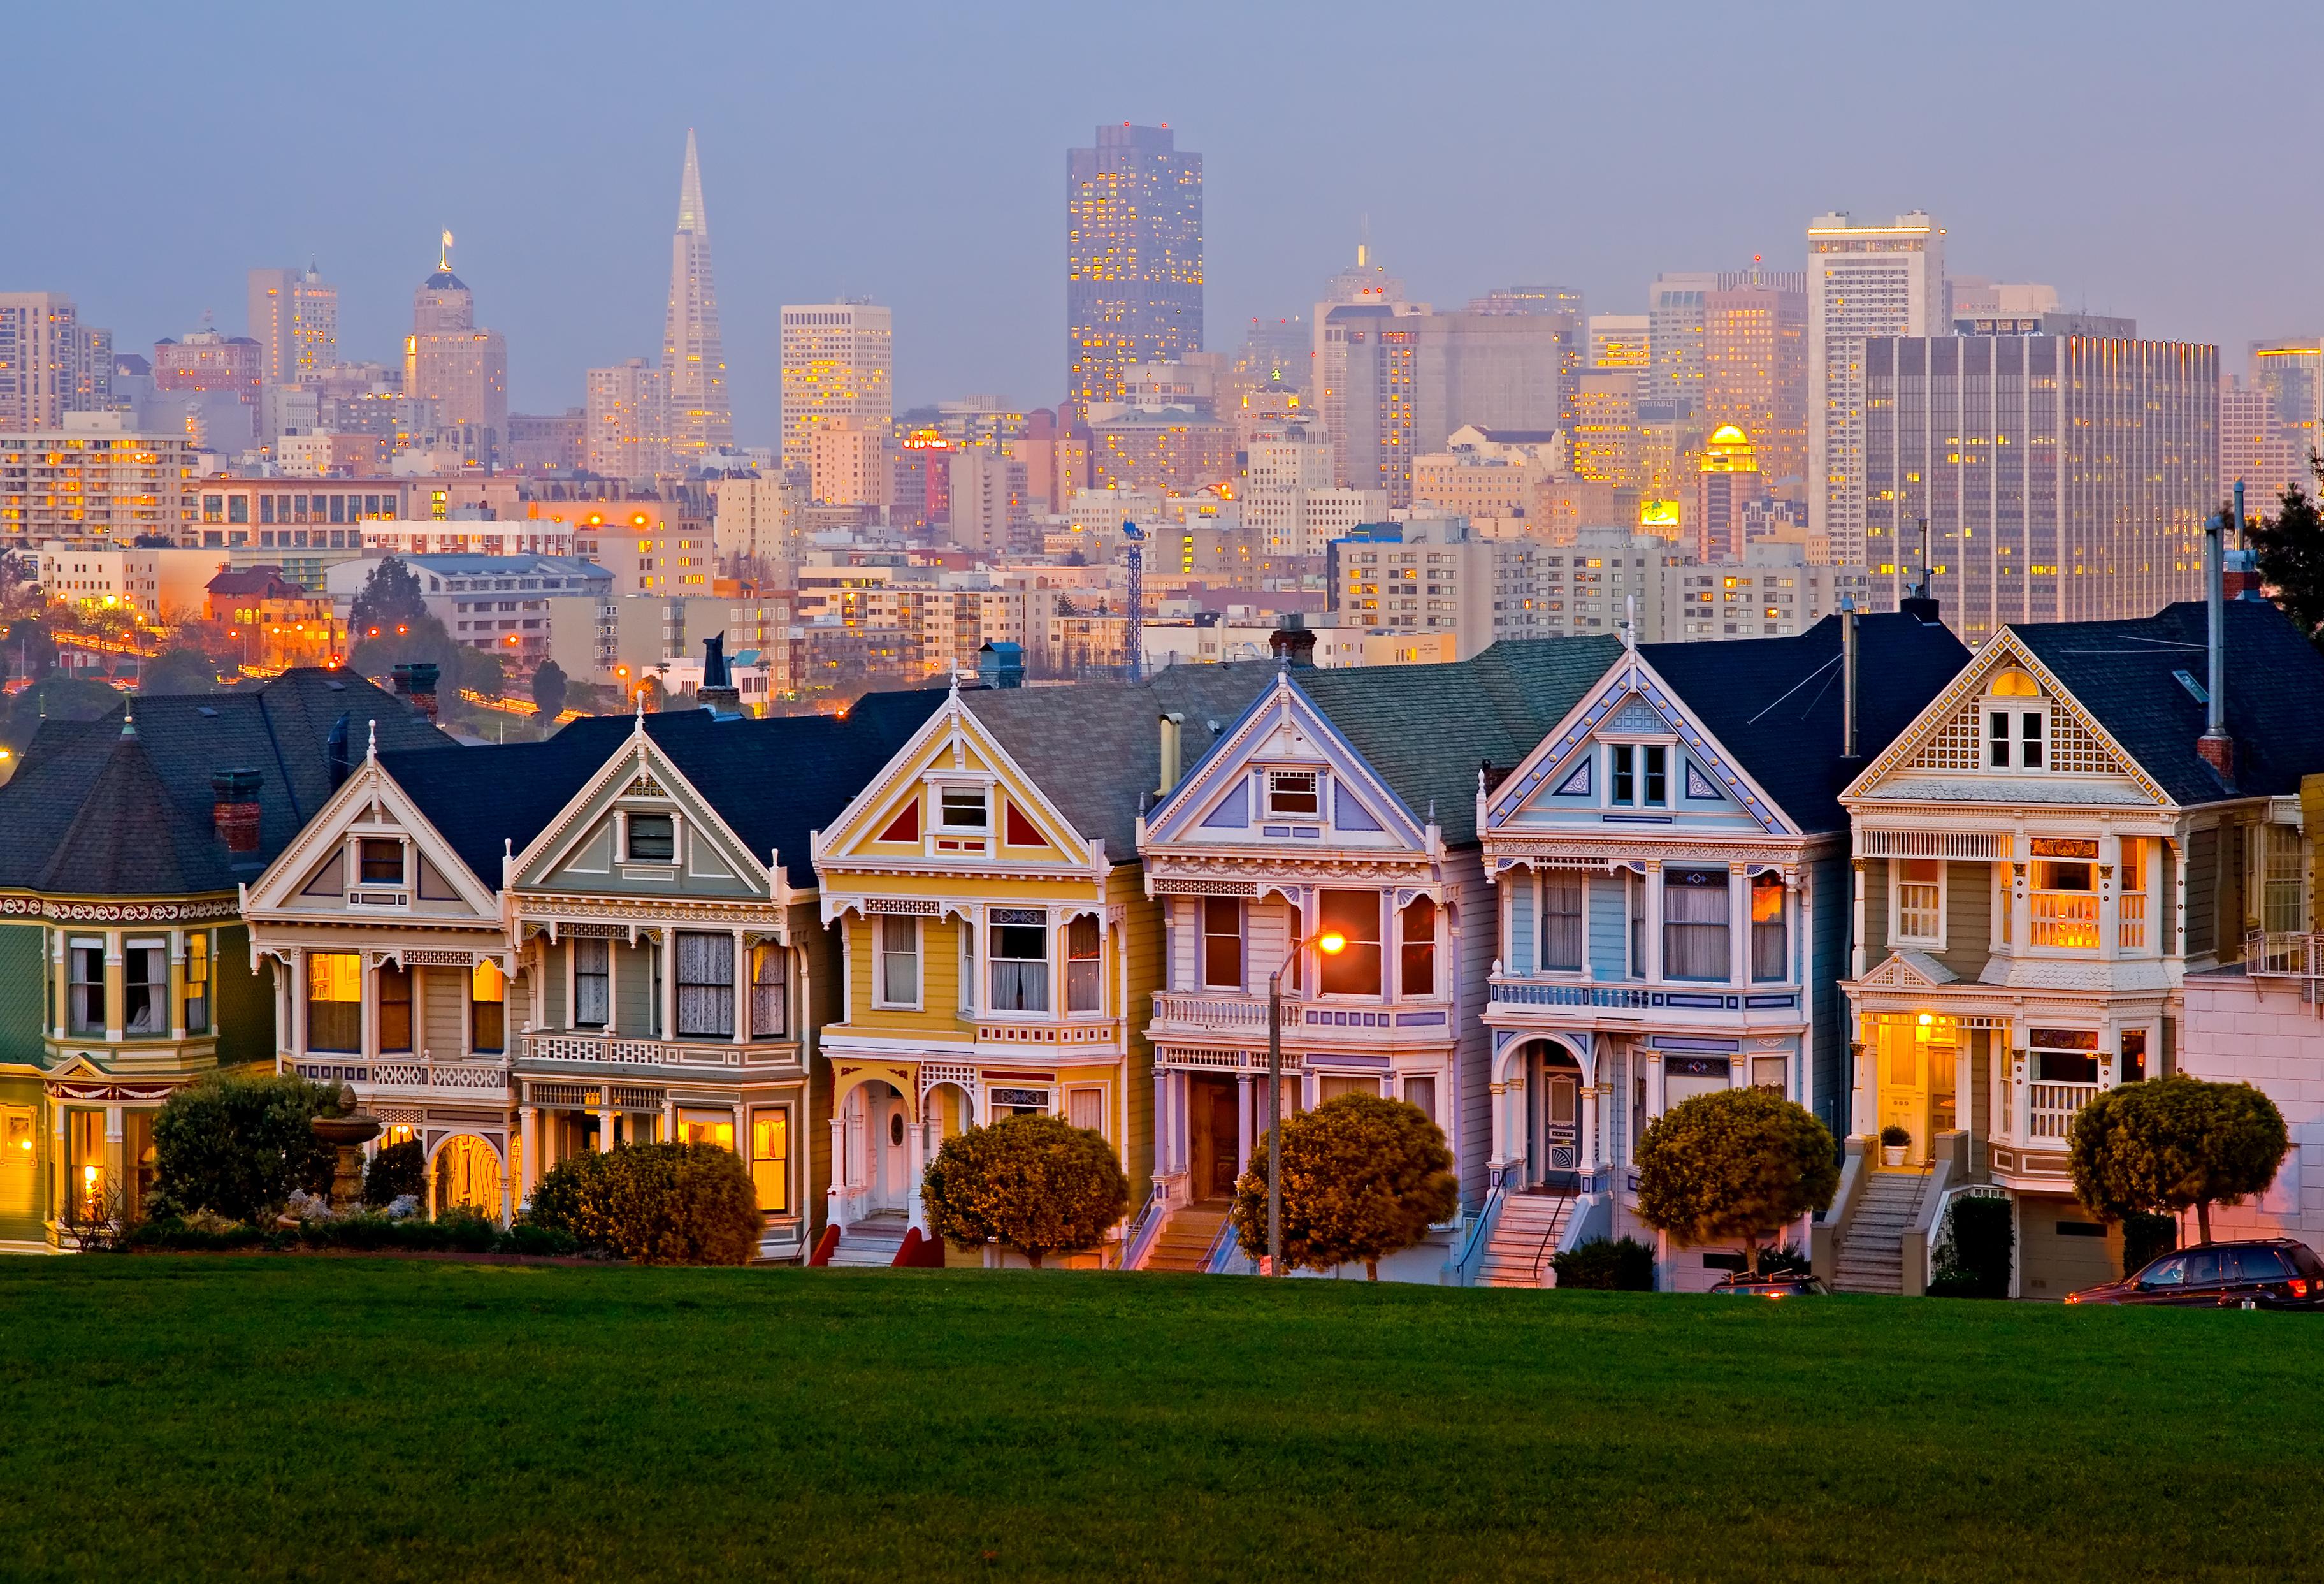 The San Francisco city, cover photo